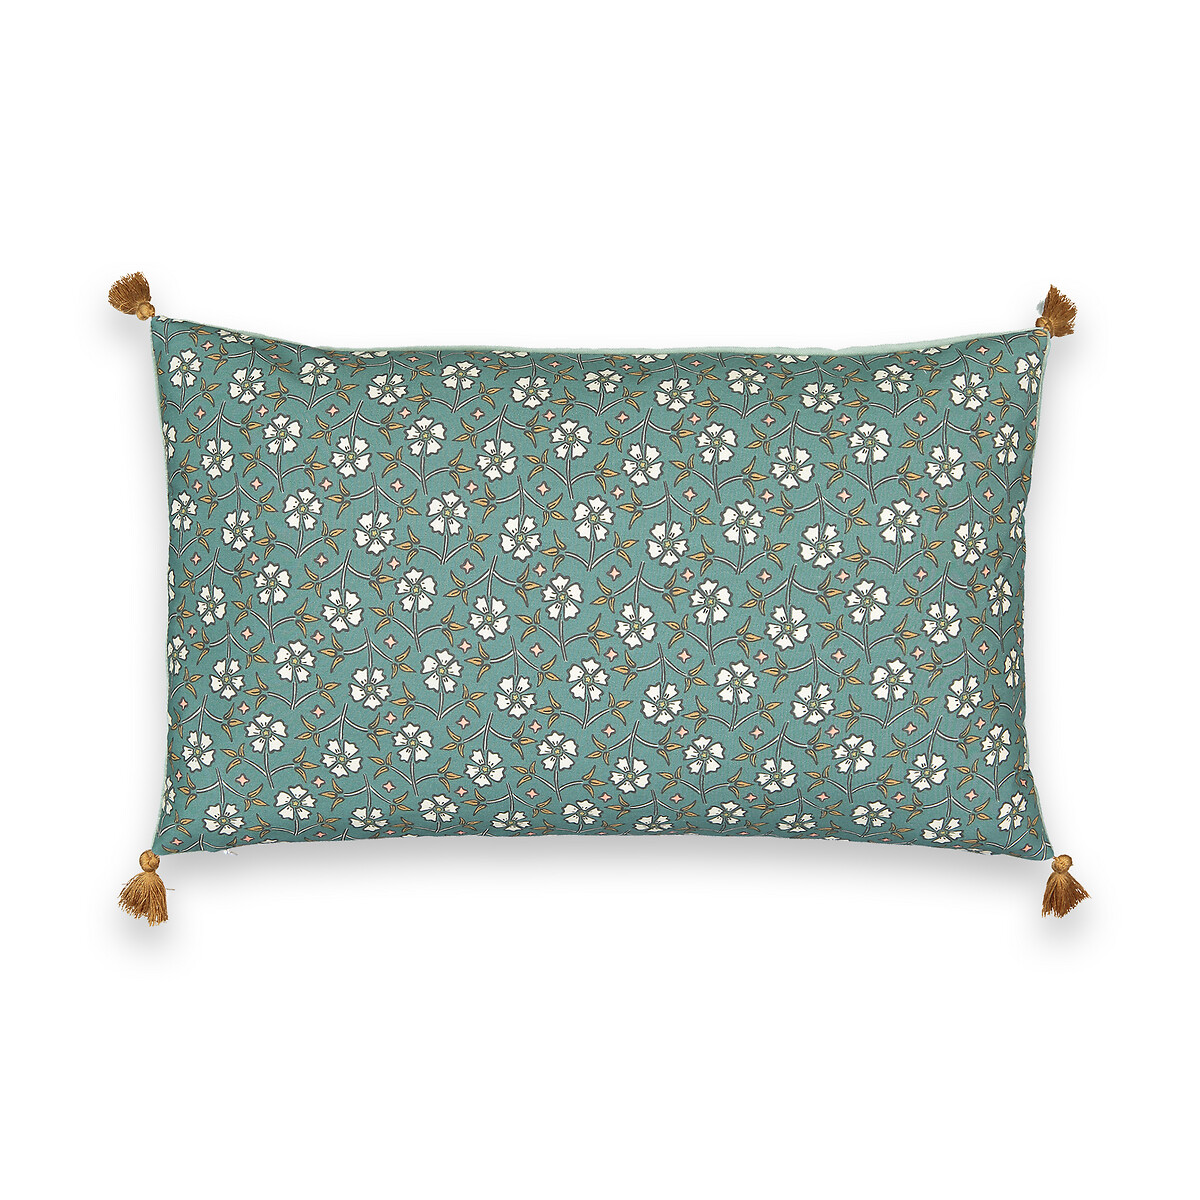 Чехол LaRedoute На подушку из велюра с принтом Olden 50 x 30 см зеленый, размер 50 x 30 см - фото 1